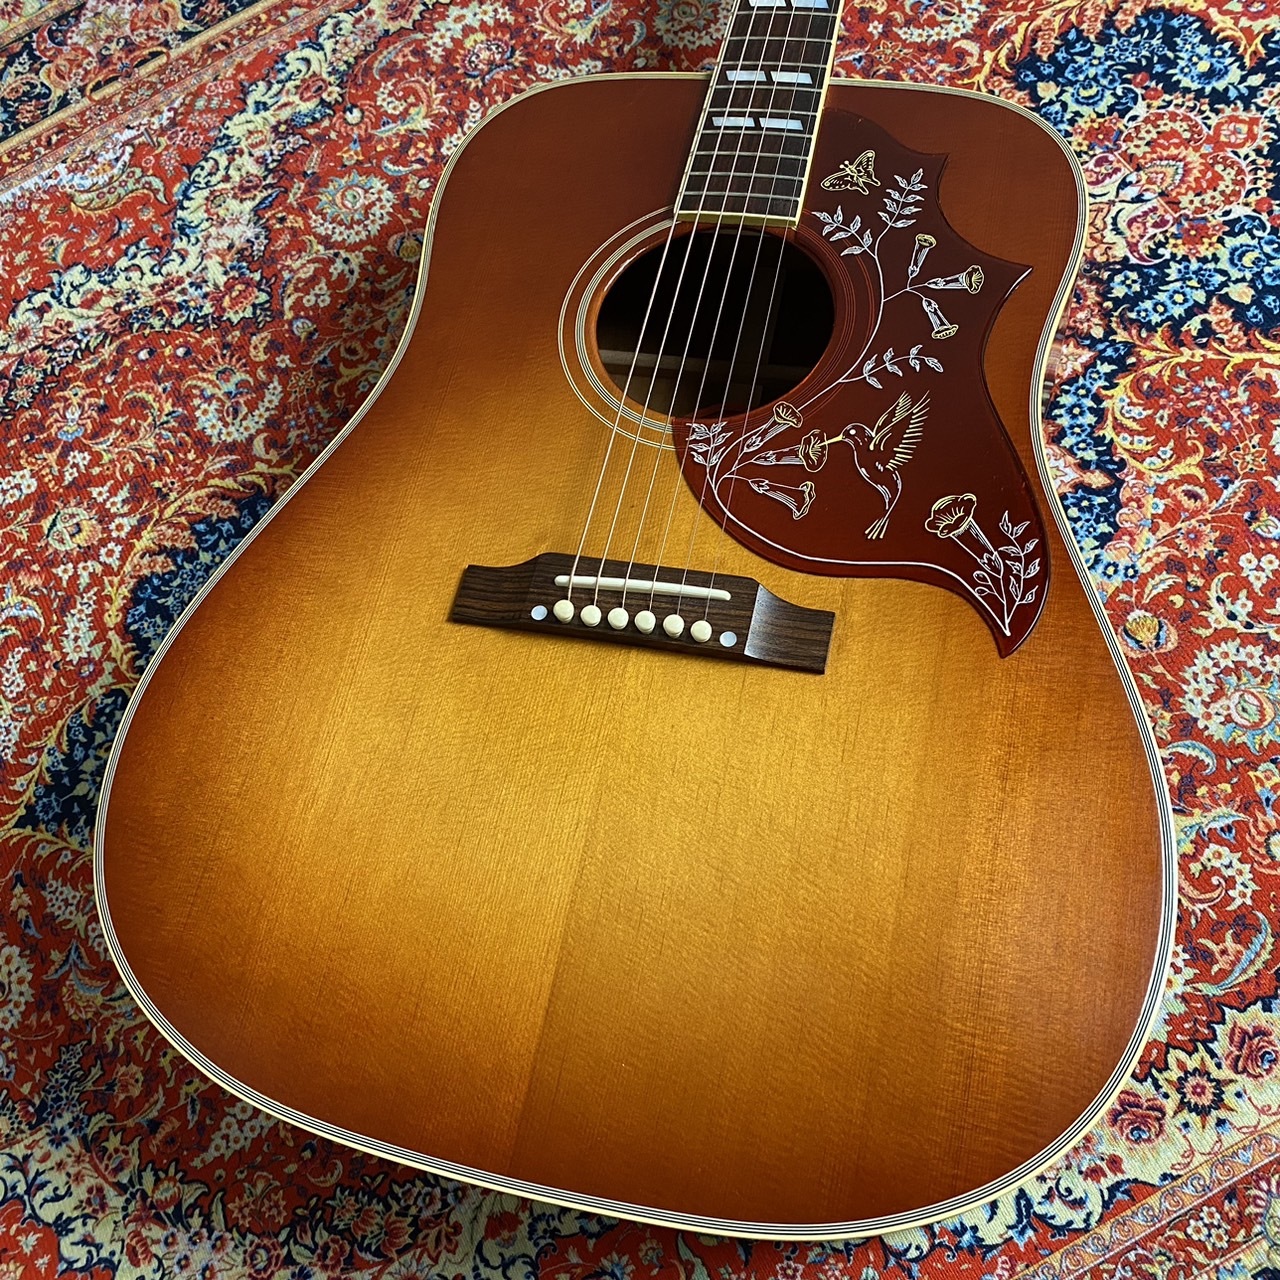 CONTENTSGibson Custom Shop 1960 Hummingbird Fixed Bridge (Heritage Cherry Sunburst)ギターアドバイザーが楽器選びをサポート最新情報を手に入れよう分割無金利キャンペーン音楽教室も開講中お問い合わせGibson Custo […]